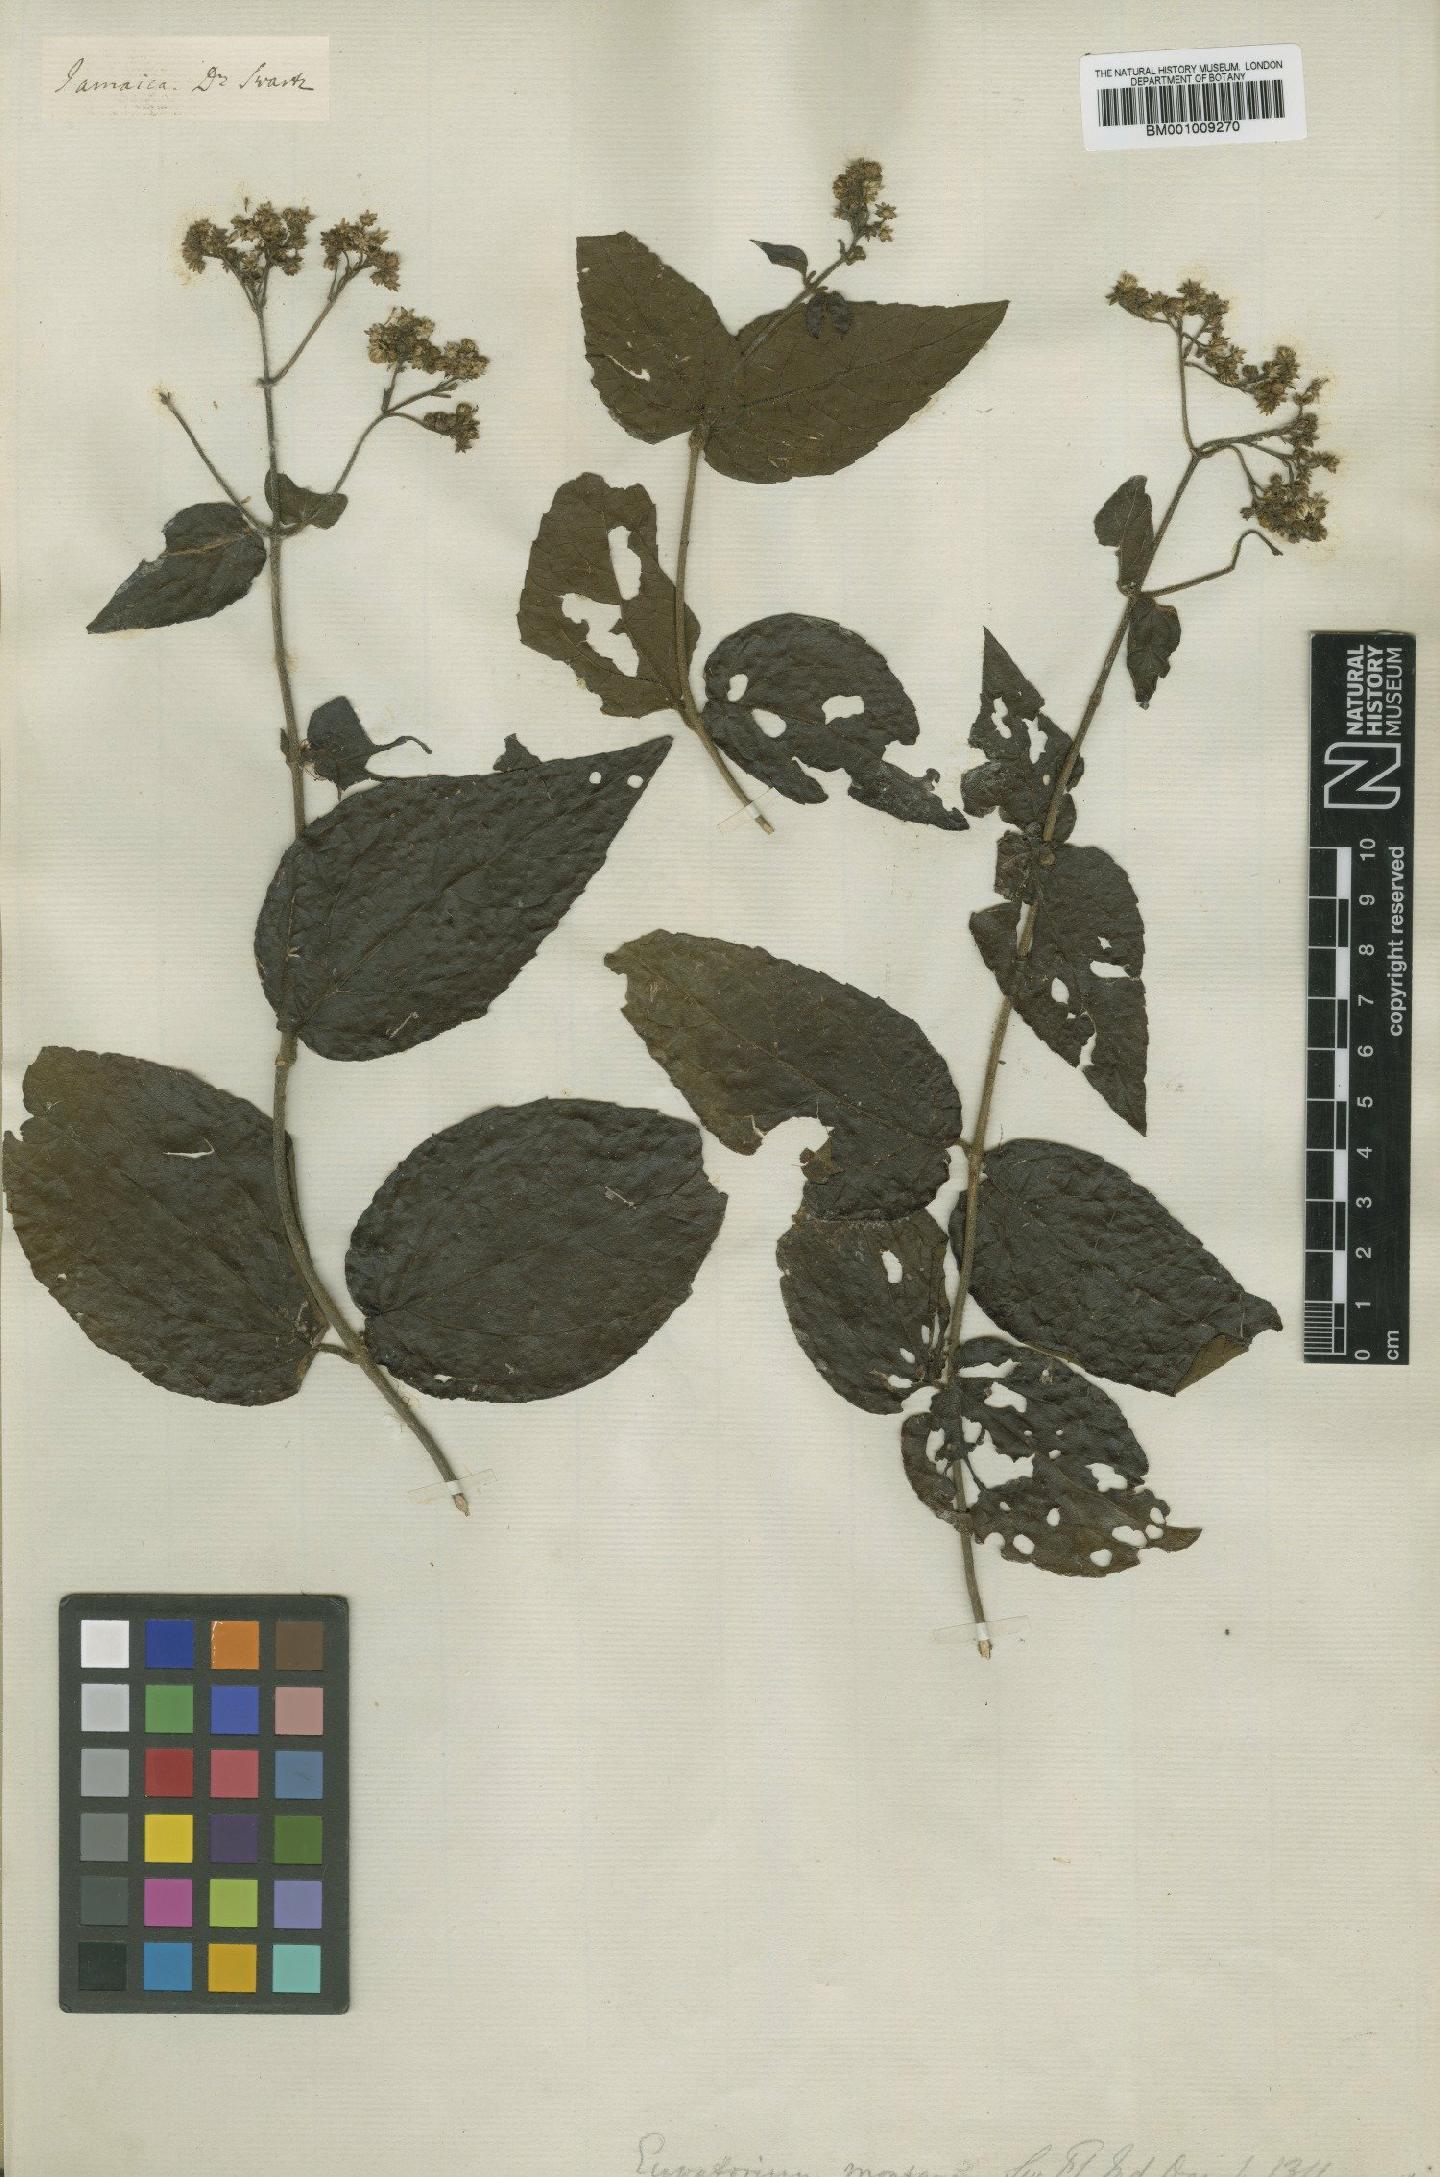 To NHMUK collection (Koanophyllon montanum (Sw.) R.M.King & H.Rob.; Type; NHMUK:ecatalogue:562094)